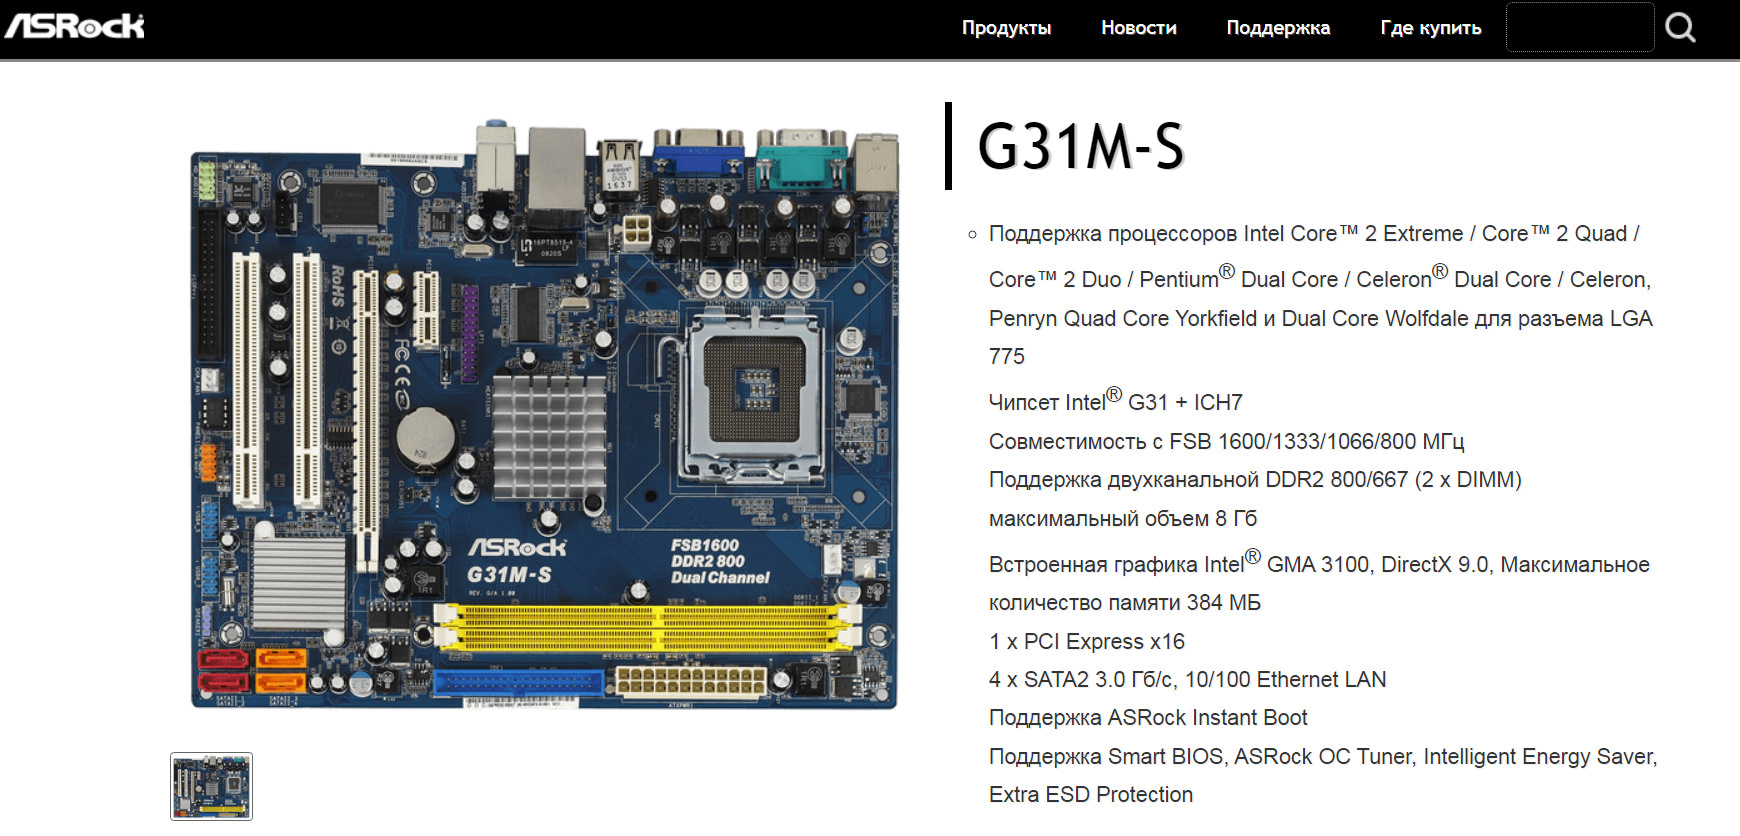 Intel gma 3100. Материнская плата g31 ASROCK. ASROCK g31m-s схема материнской платы. Материнская плата АСРОК fsb1600.